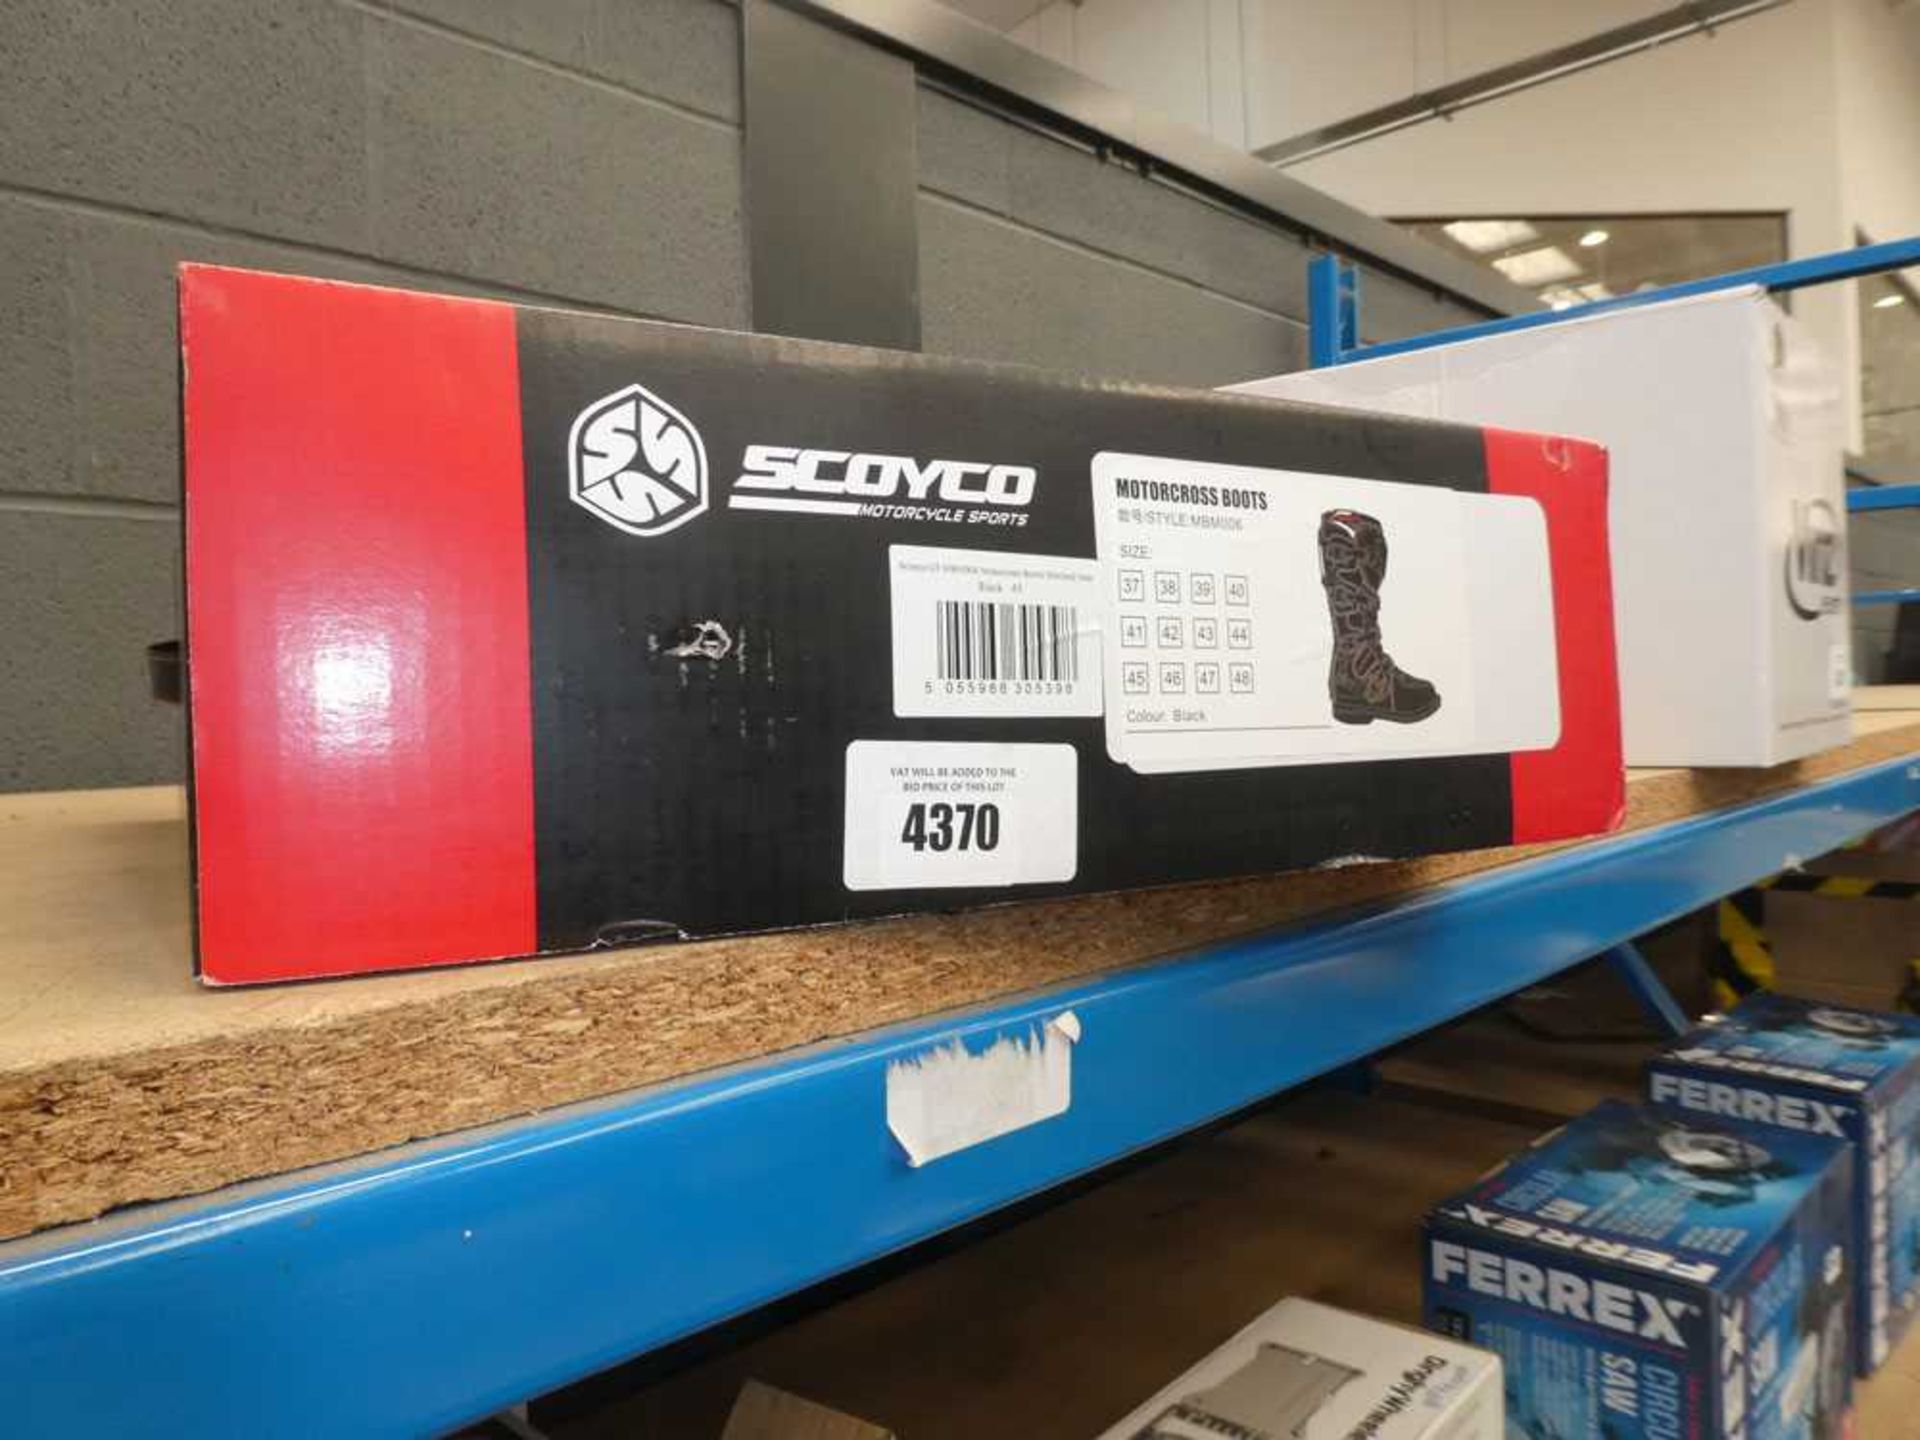 +VAT Pair of size 45 Scoyco black motocross boots